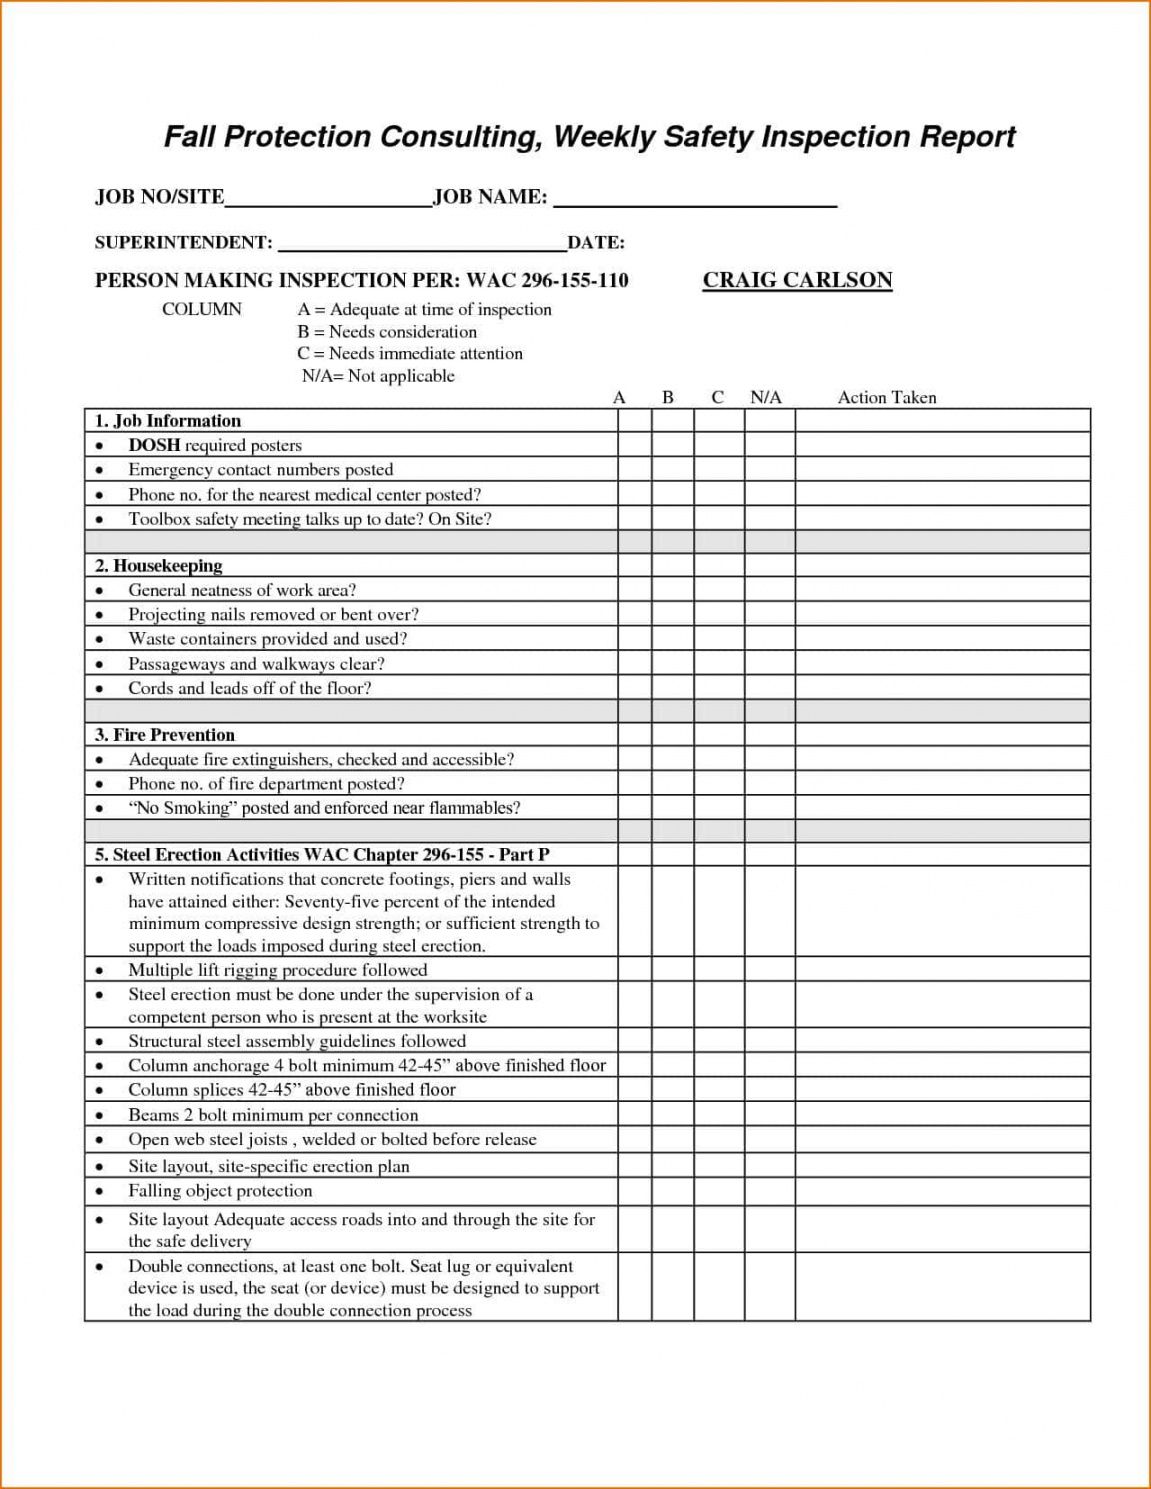 editable tenant house n checklist rental home pdf rented property form rental property checklist template pdf